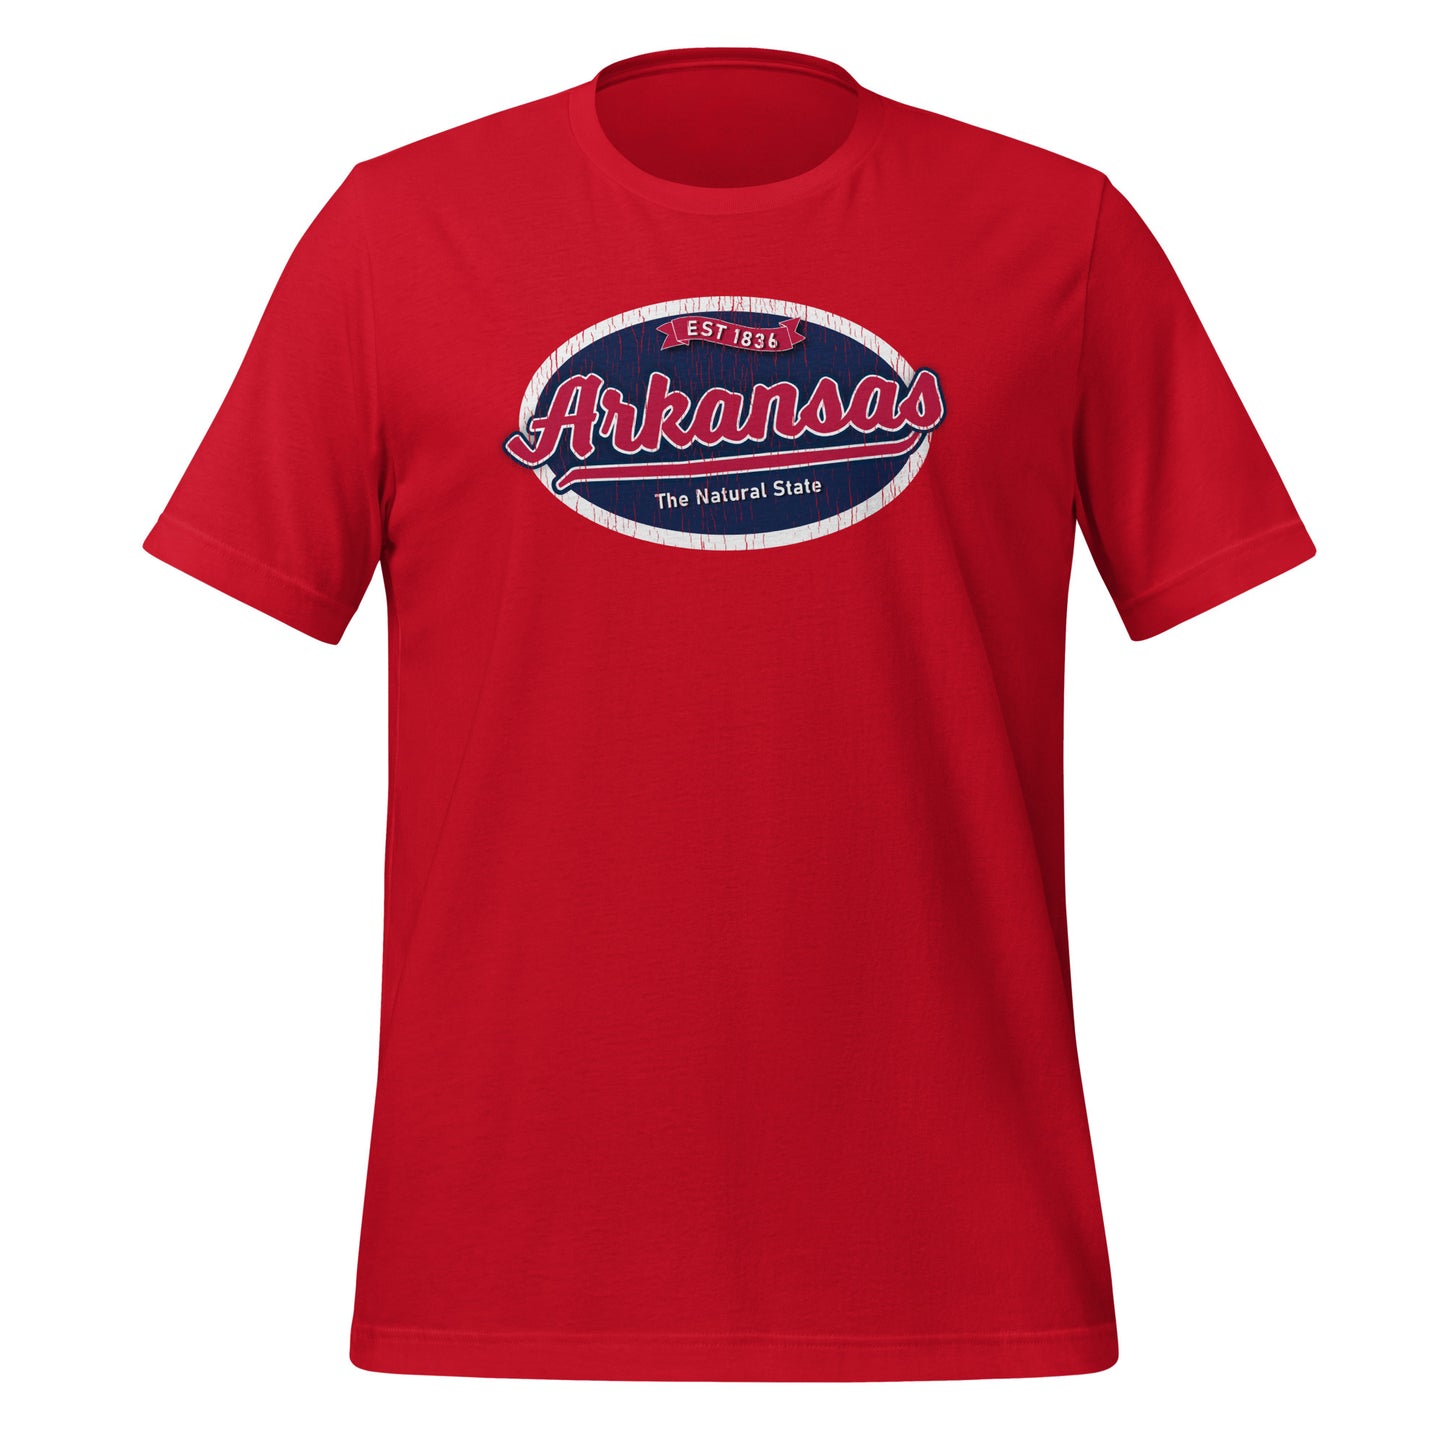 Arkansas The Natural State t-shirt